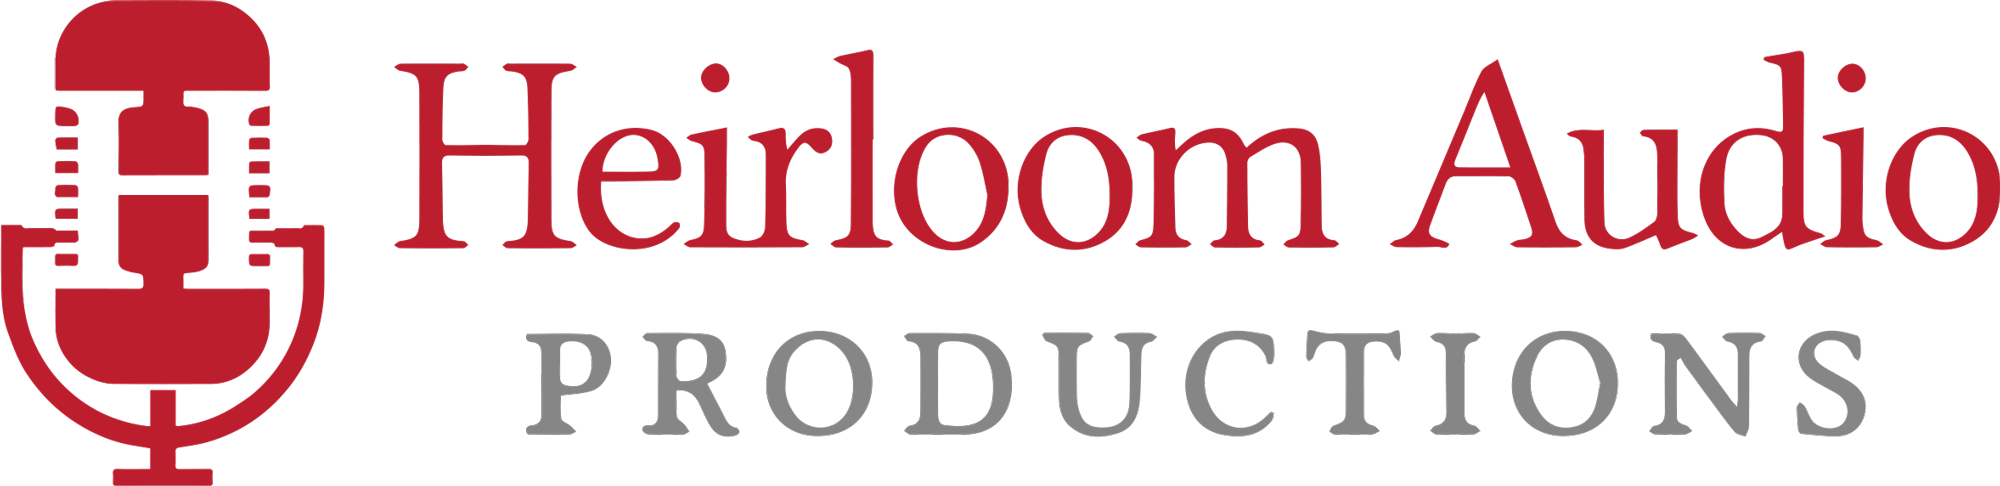 Heirloom Audio logo